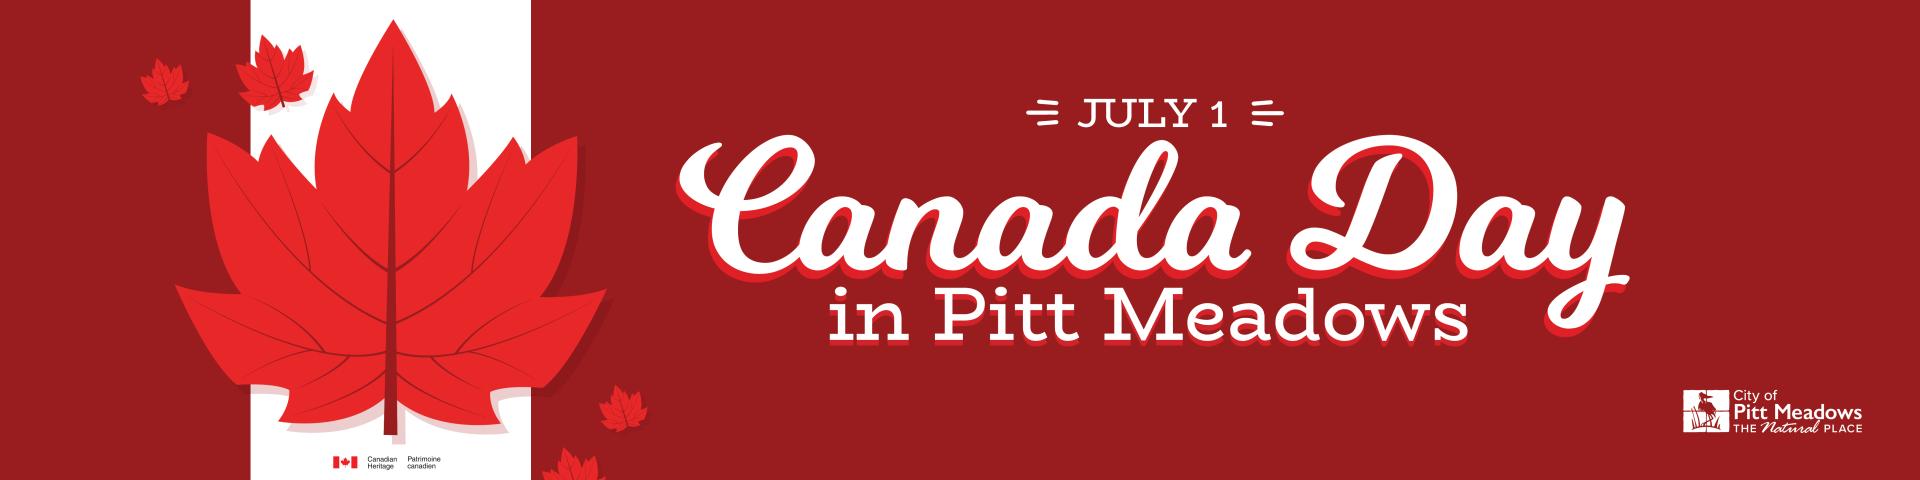 Canada Day in Pitt Meadows